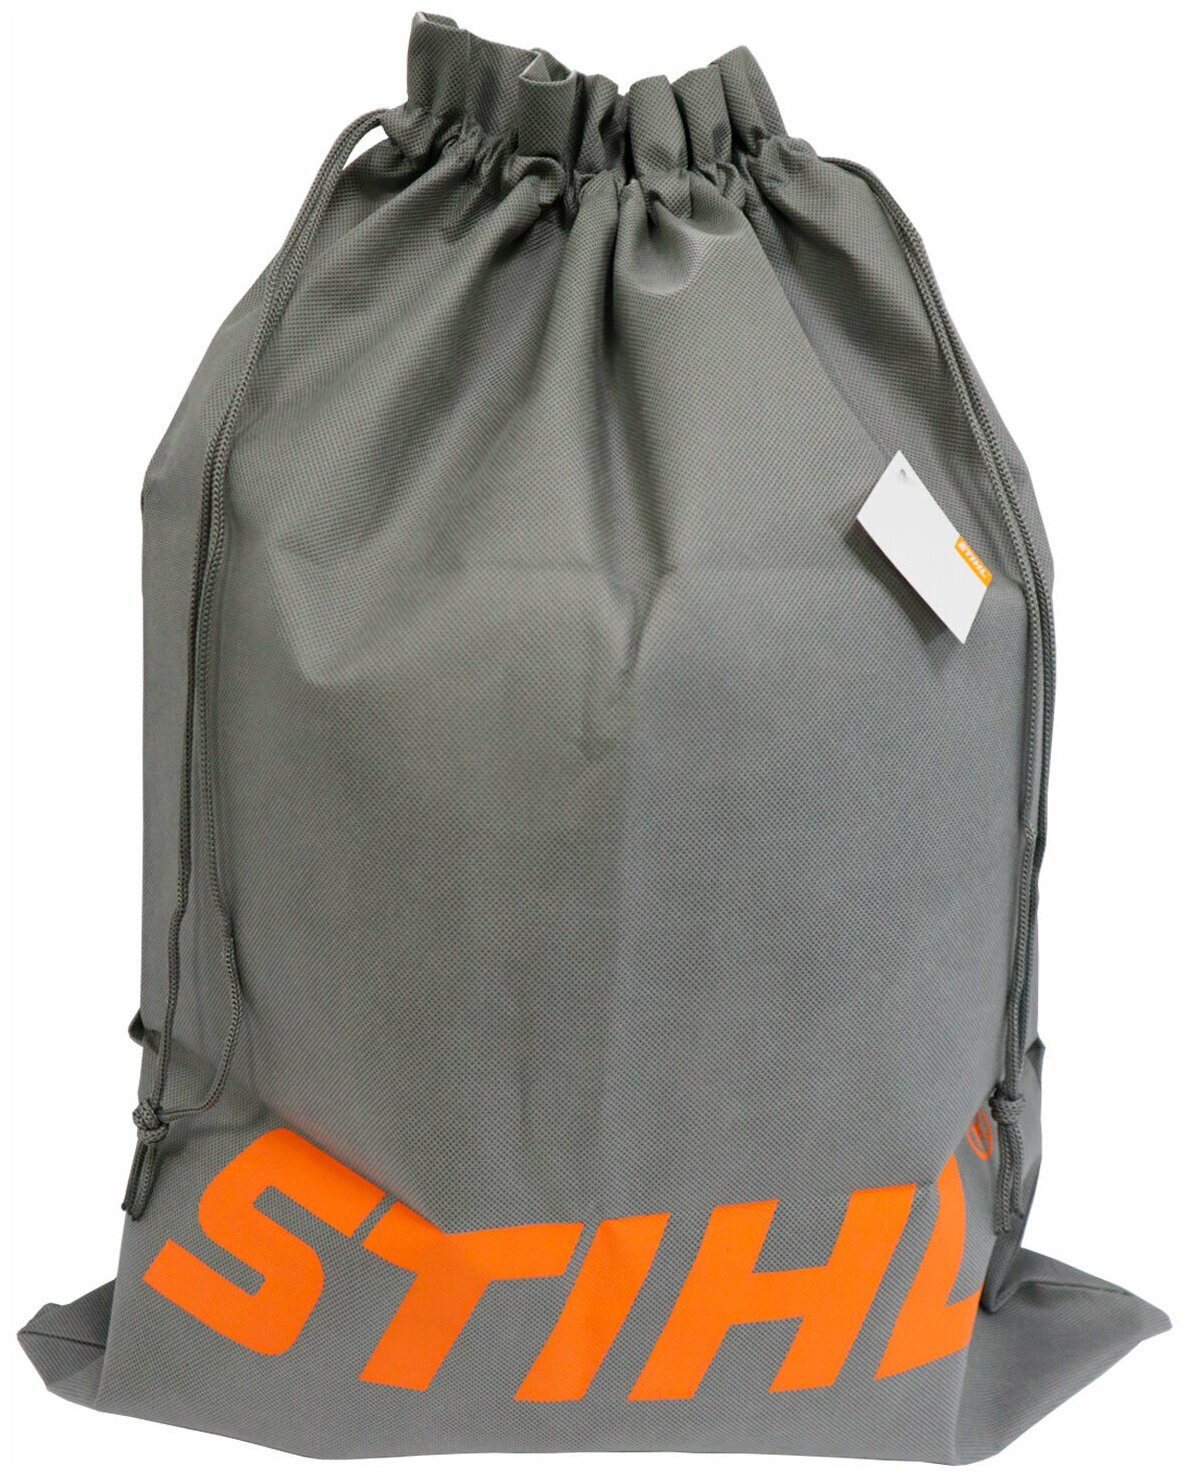 Мешок / сумка для обуви Stihl, материал полиэстер, цвет серый, размеры 34х44 см